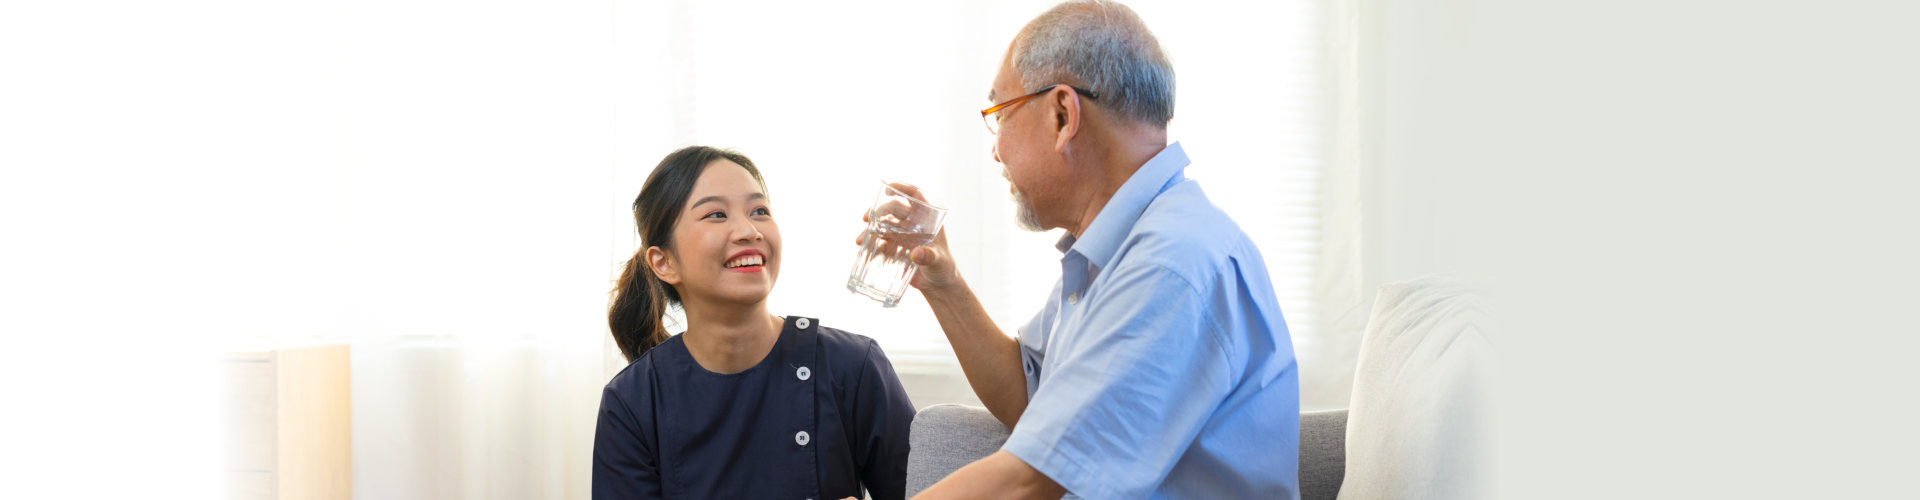 Smiling nurse giving glass of water to senior man